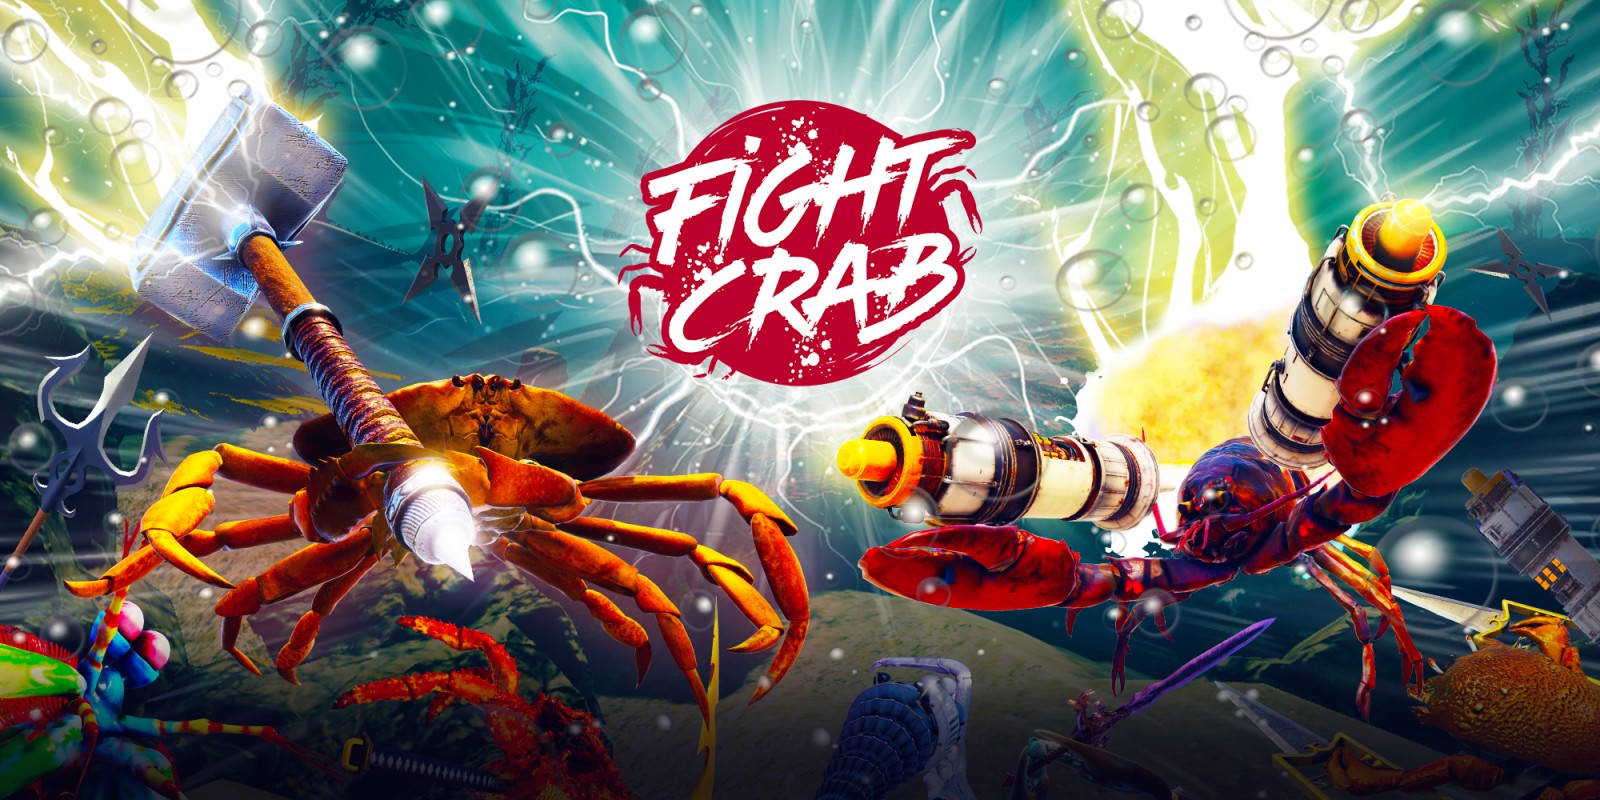 crab game download